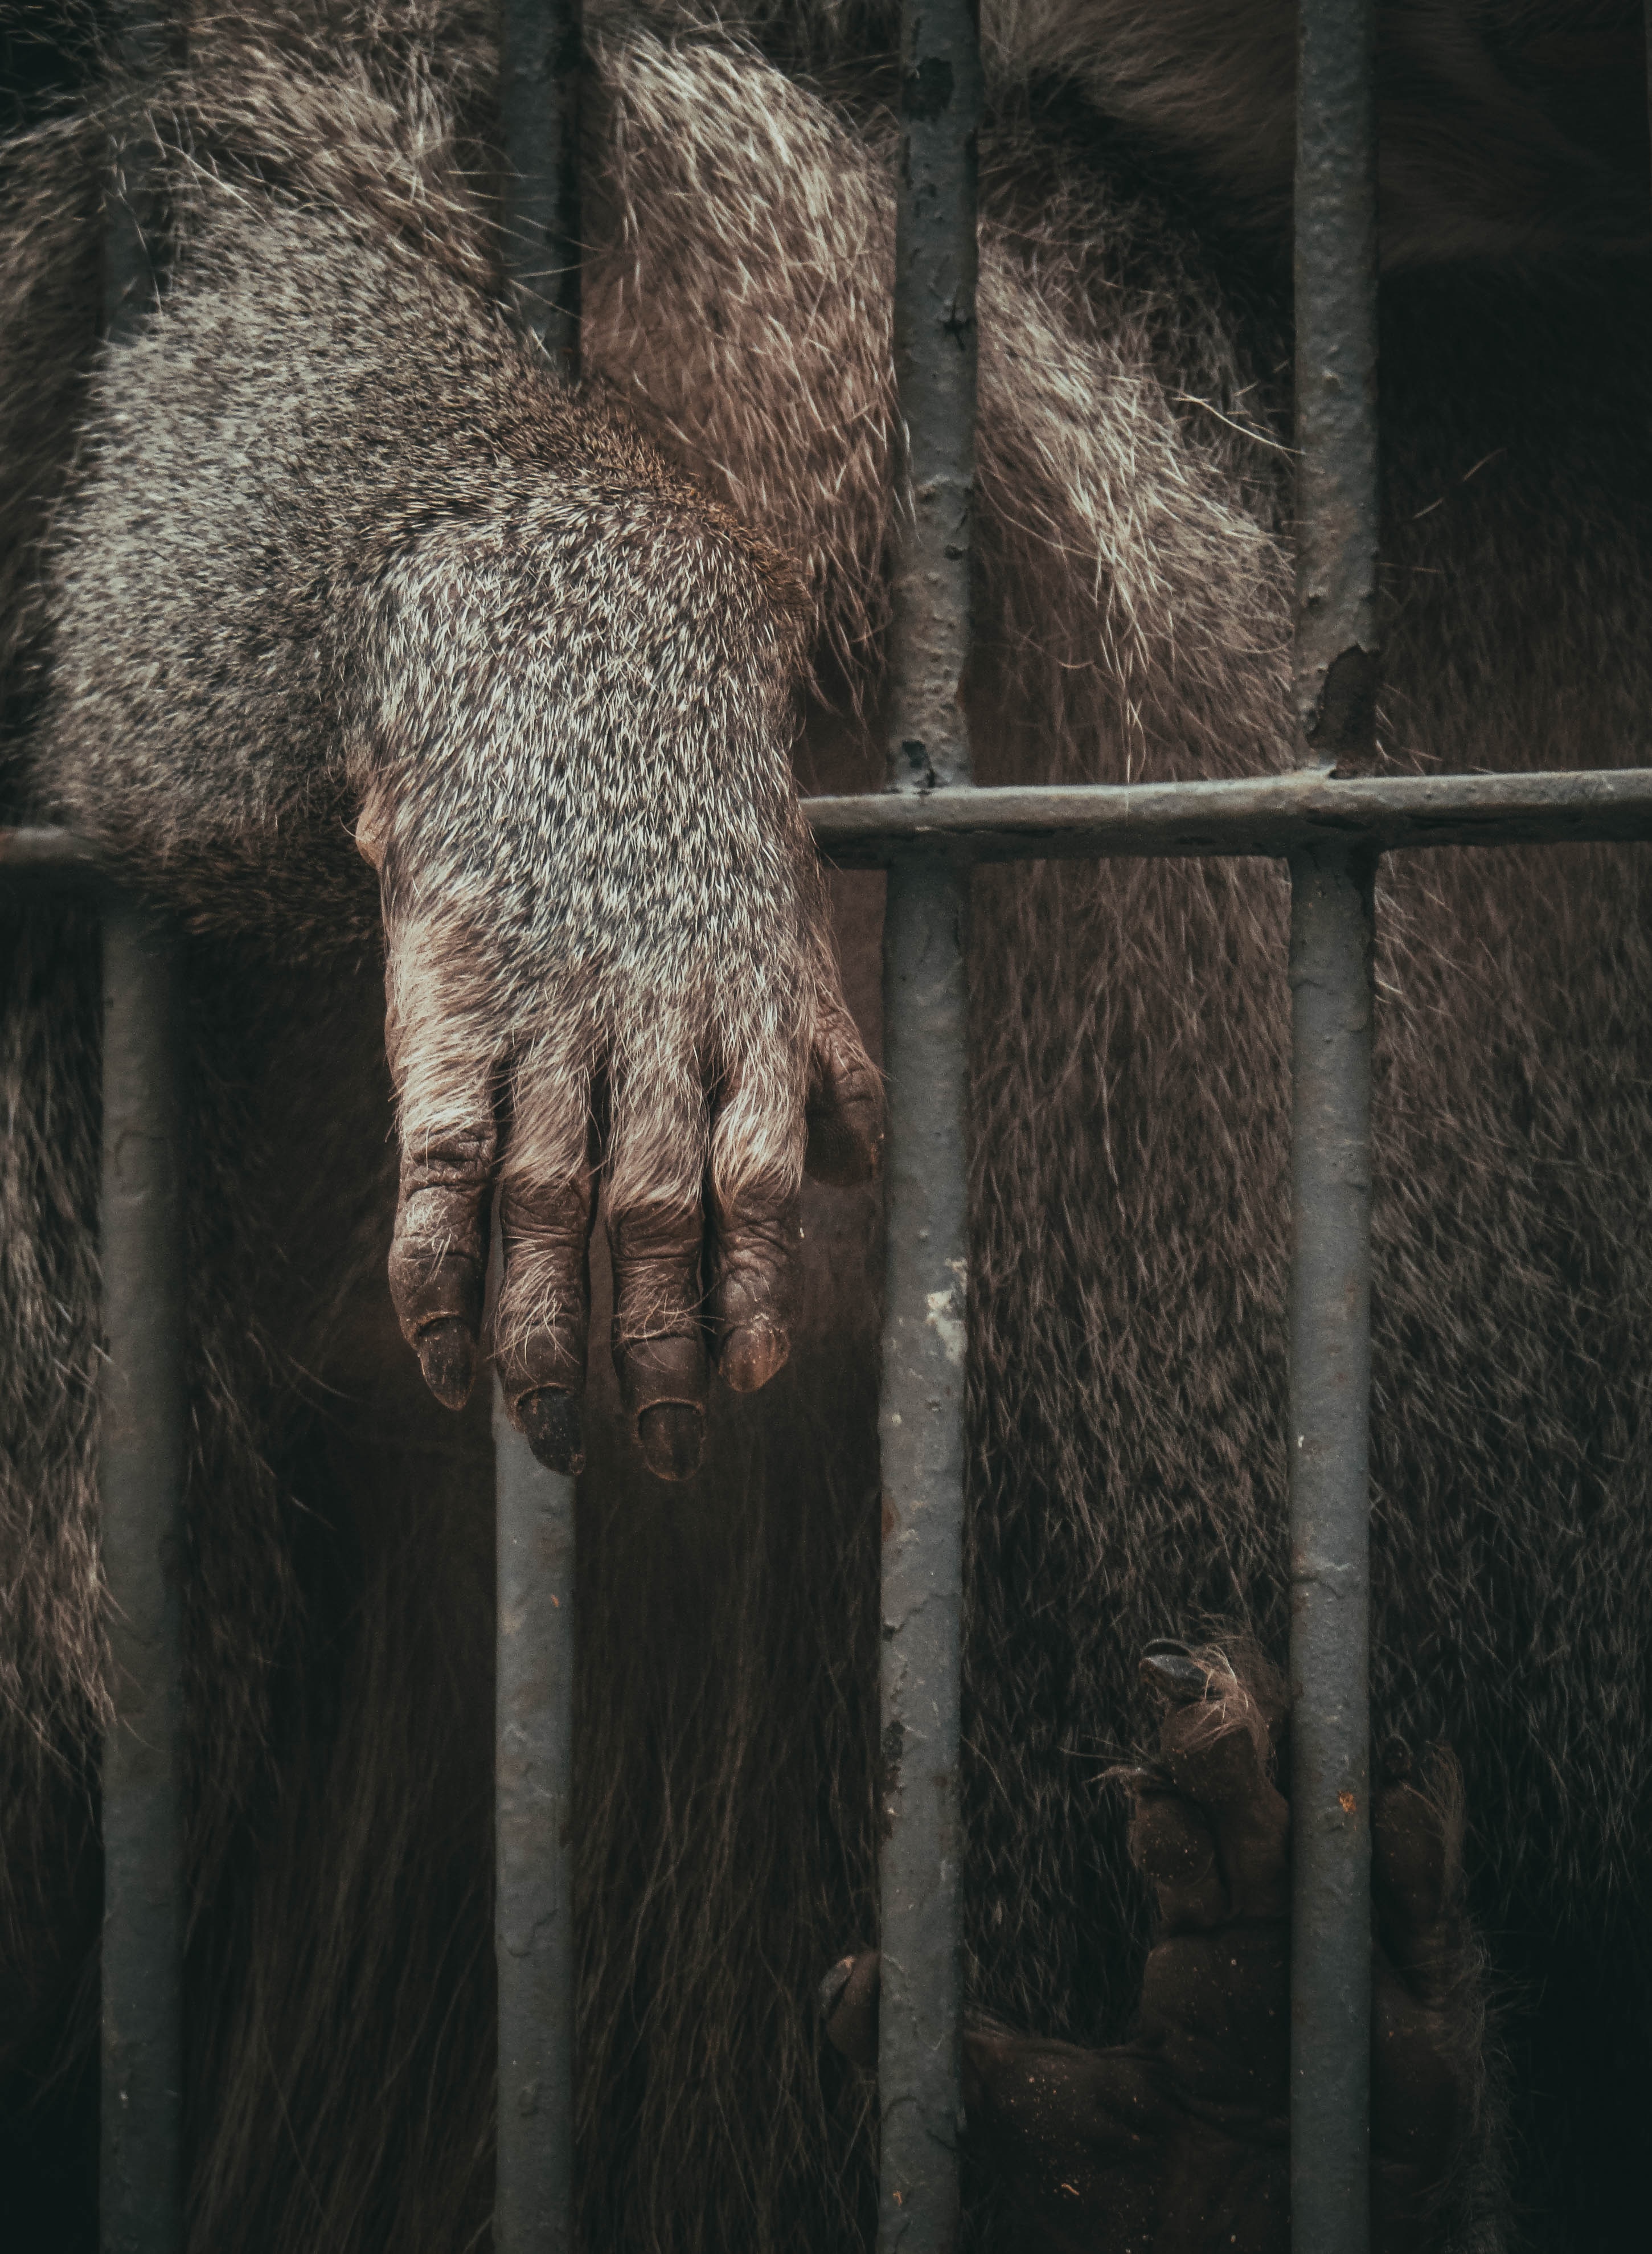 grey monkey inside cage